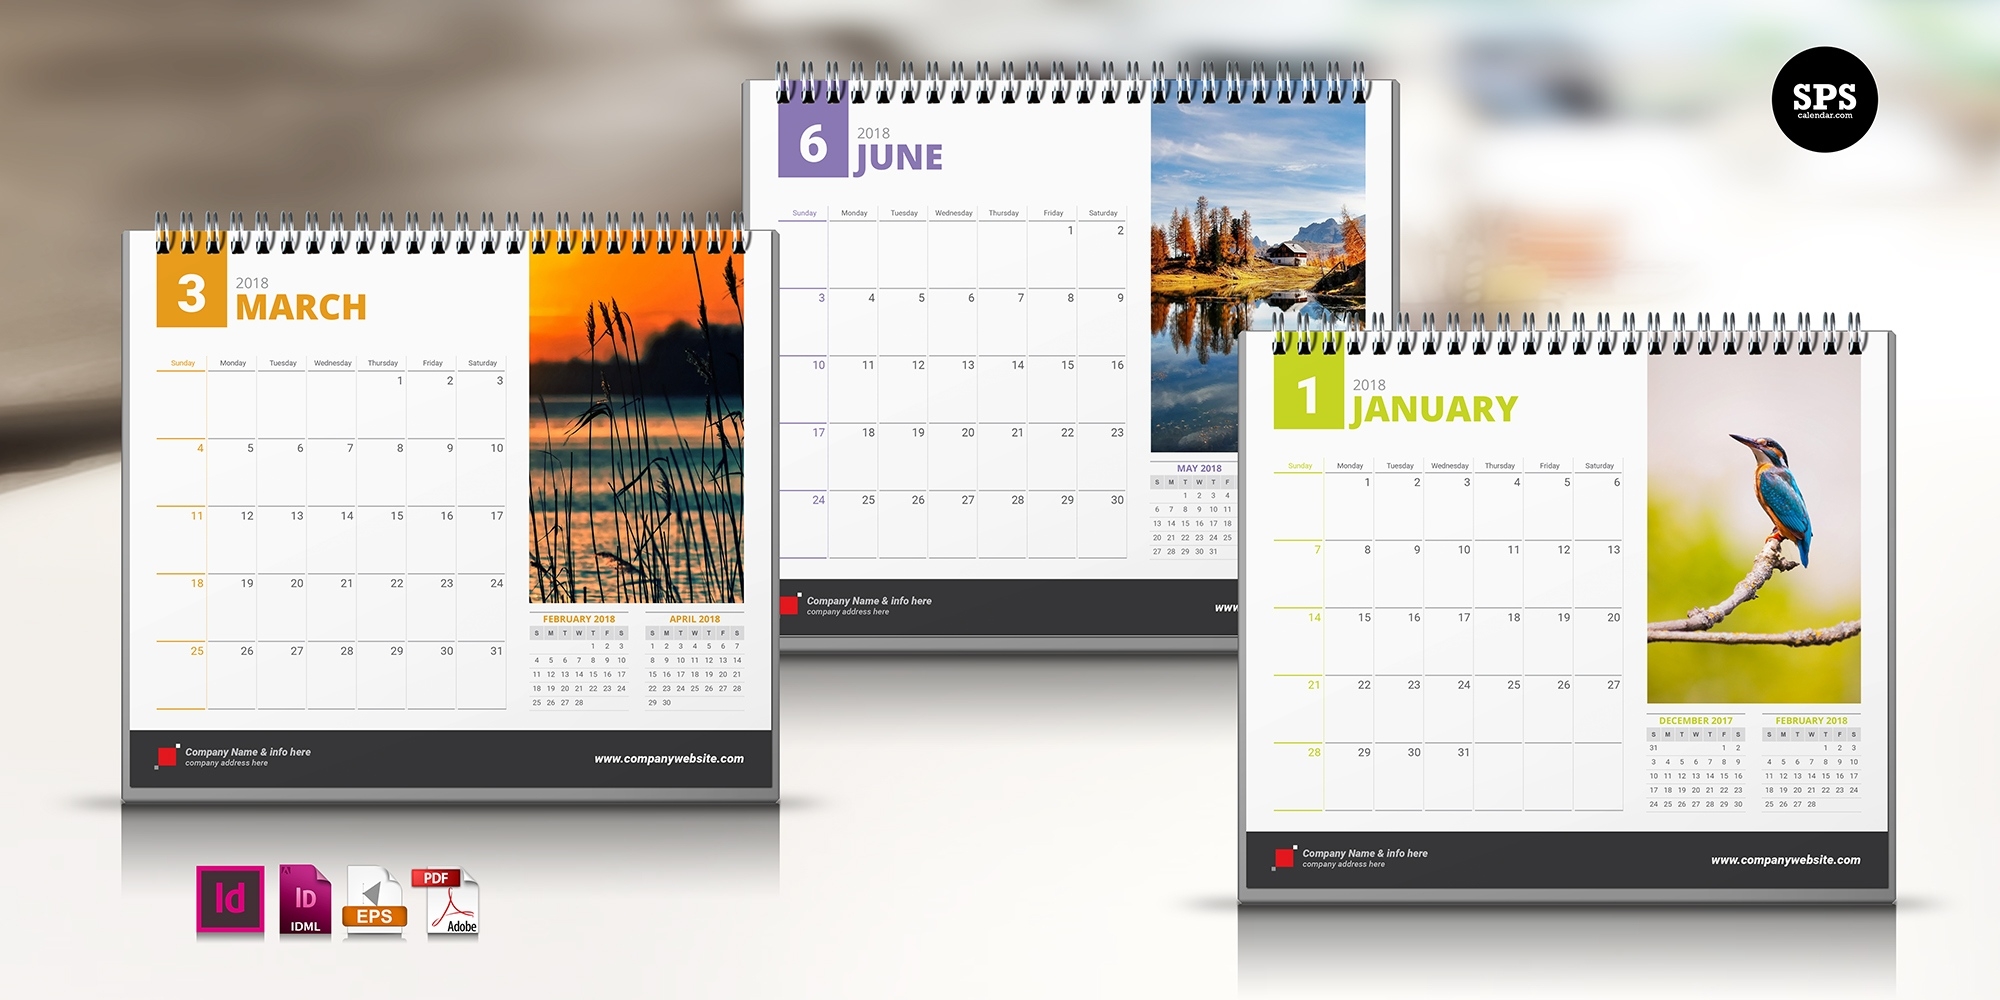 Free 2018 Indesign Calendar Template - Desk 01 - Spscalendar Free Calendar Template Indesign